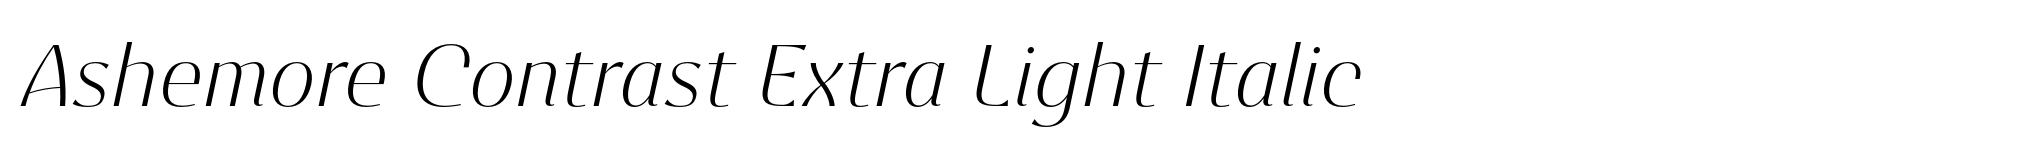 Ashemore Contrast Extra Light Italic image